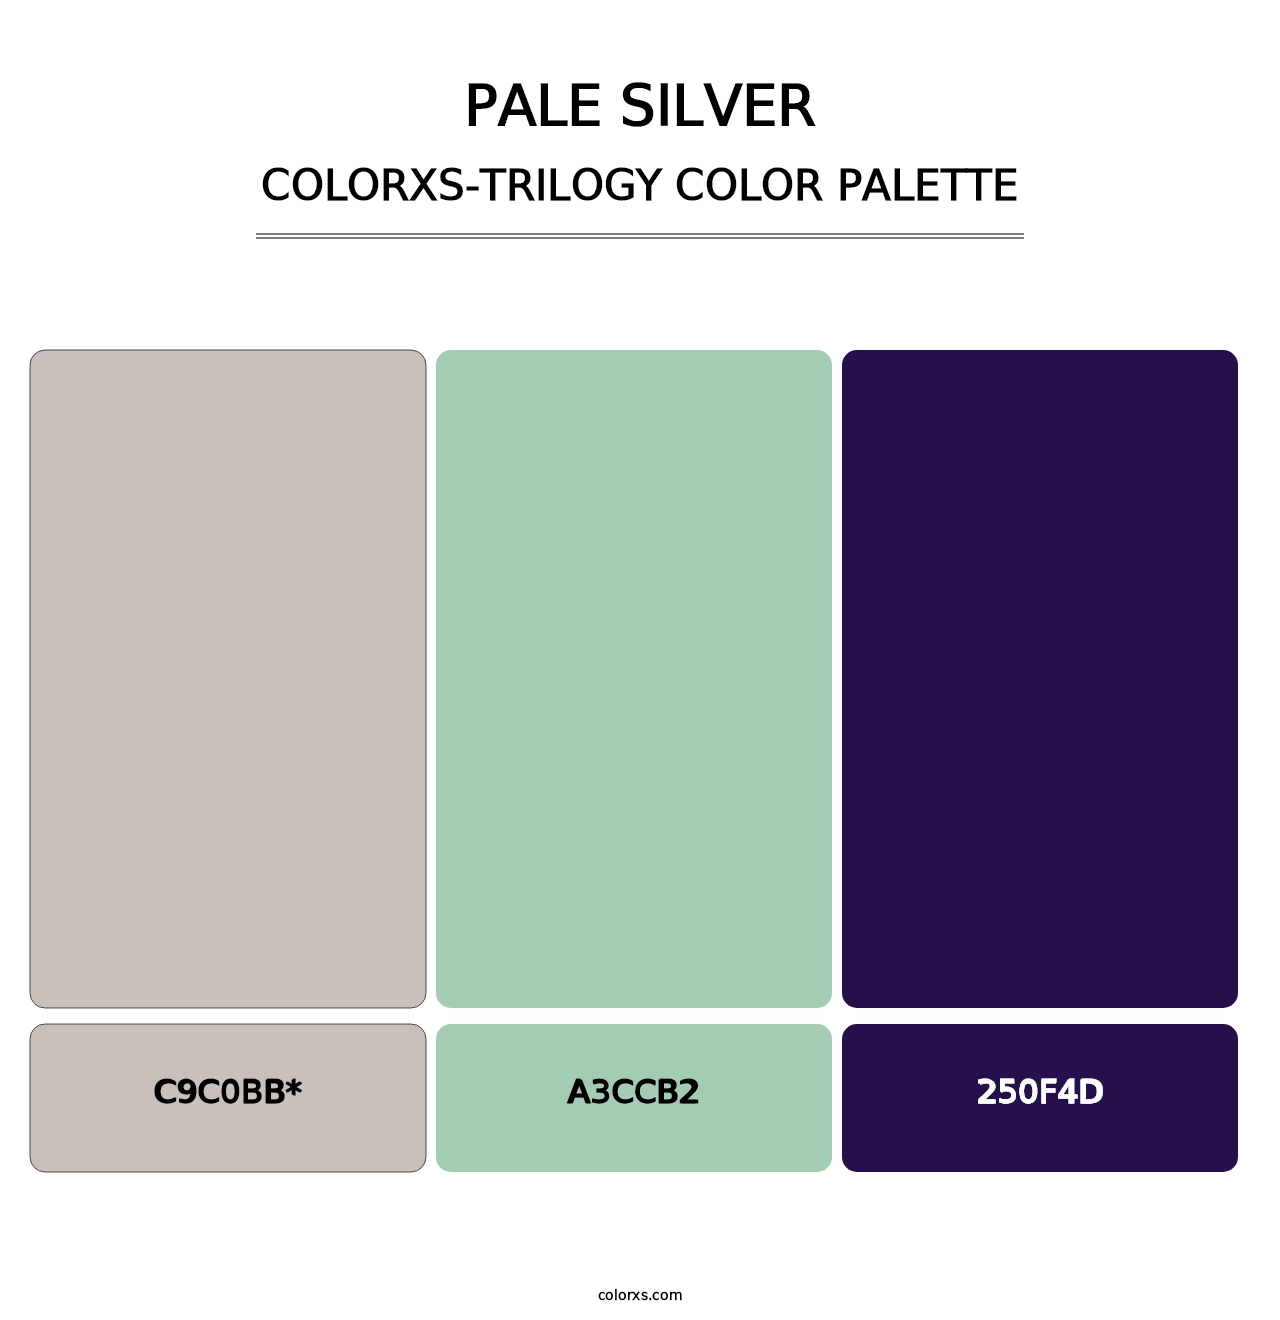 Pale Silver - Colorxs Trilogy Palette